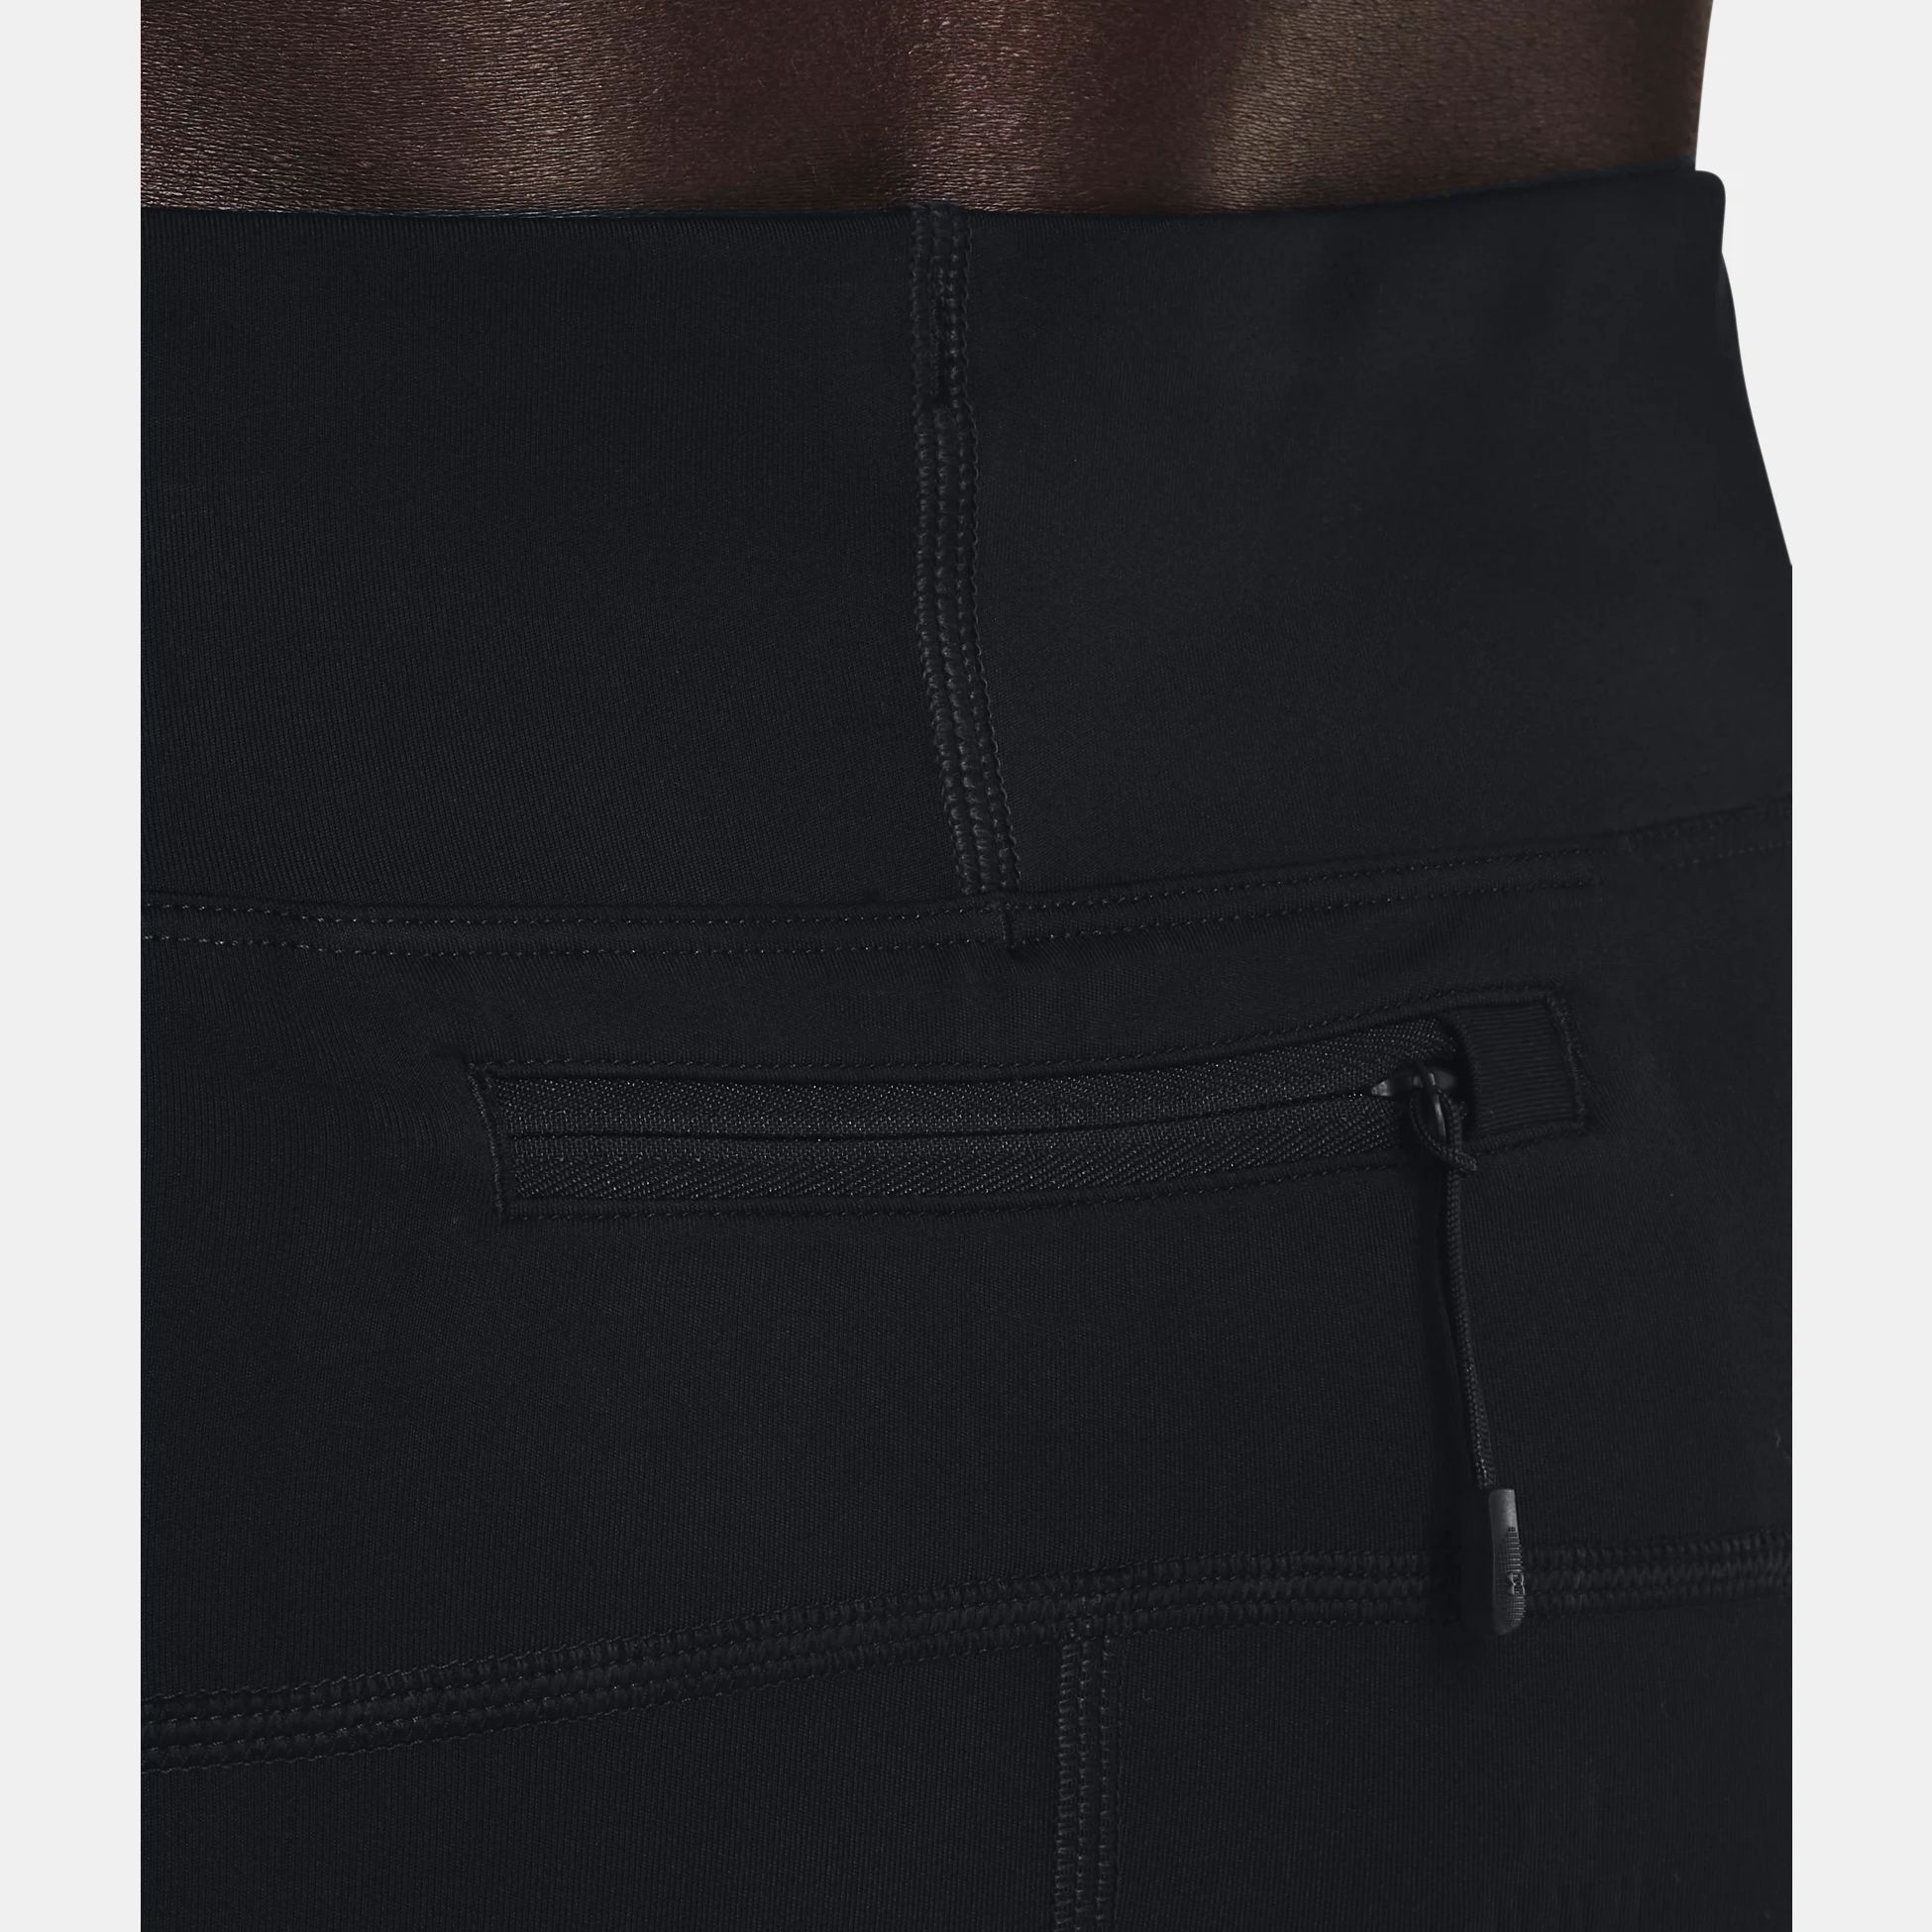 Pantaloni Lungi -  under armour Speedpocket Tights